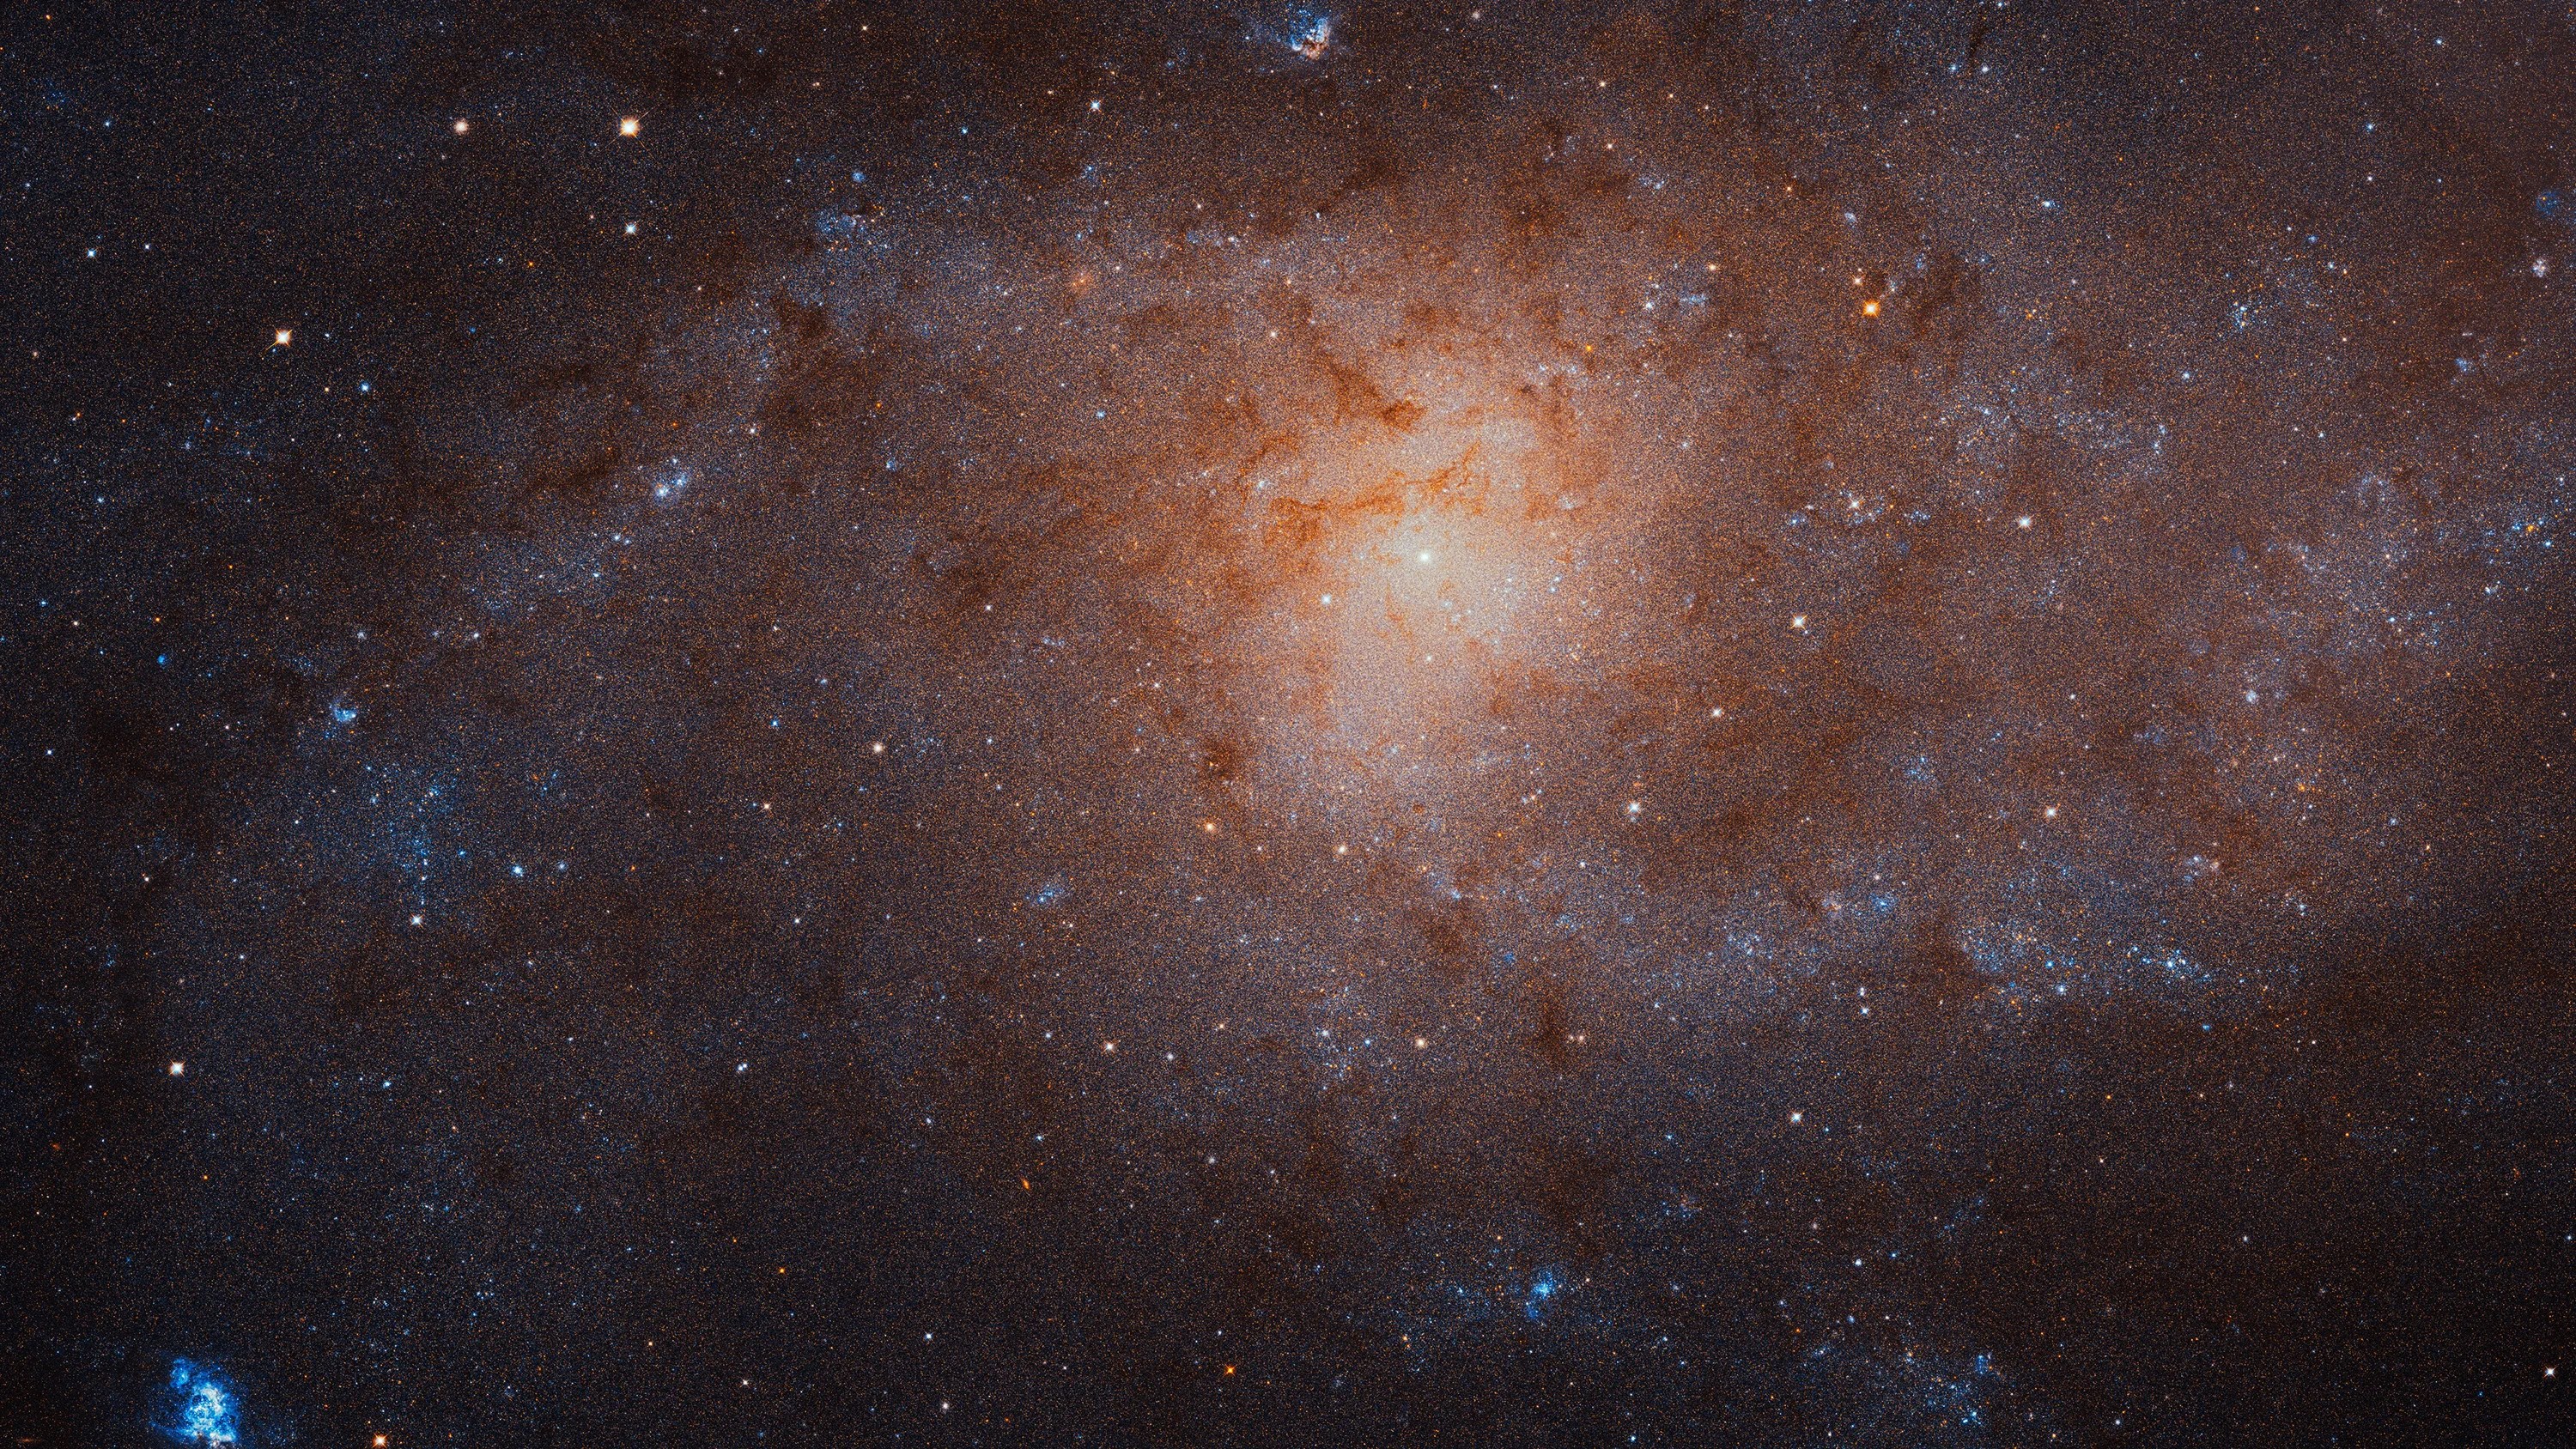 Hubble image of M33